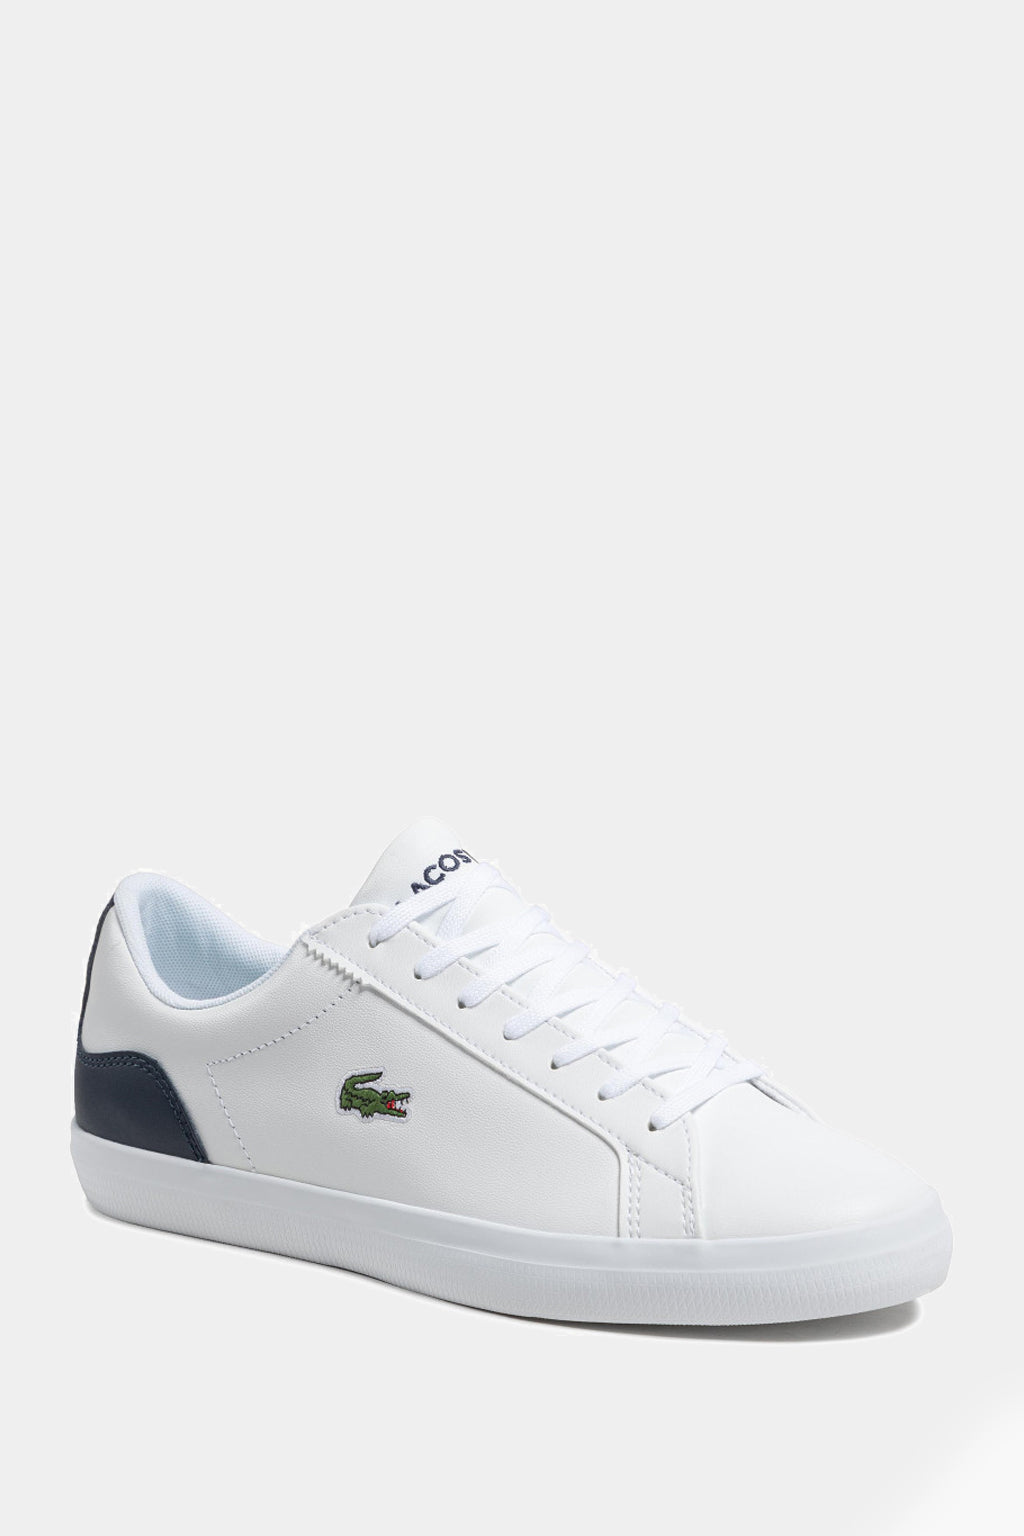 Lacoste - Lacoste - Lerond BL 21 1 Cma Men's White - Navy Sneaker